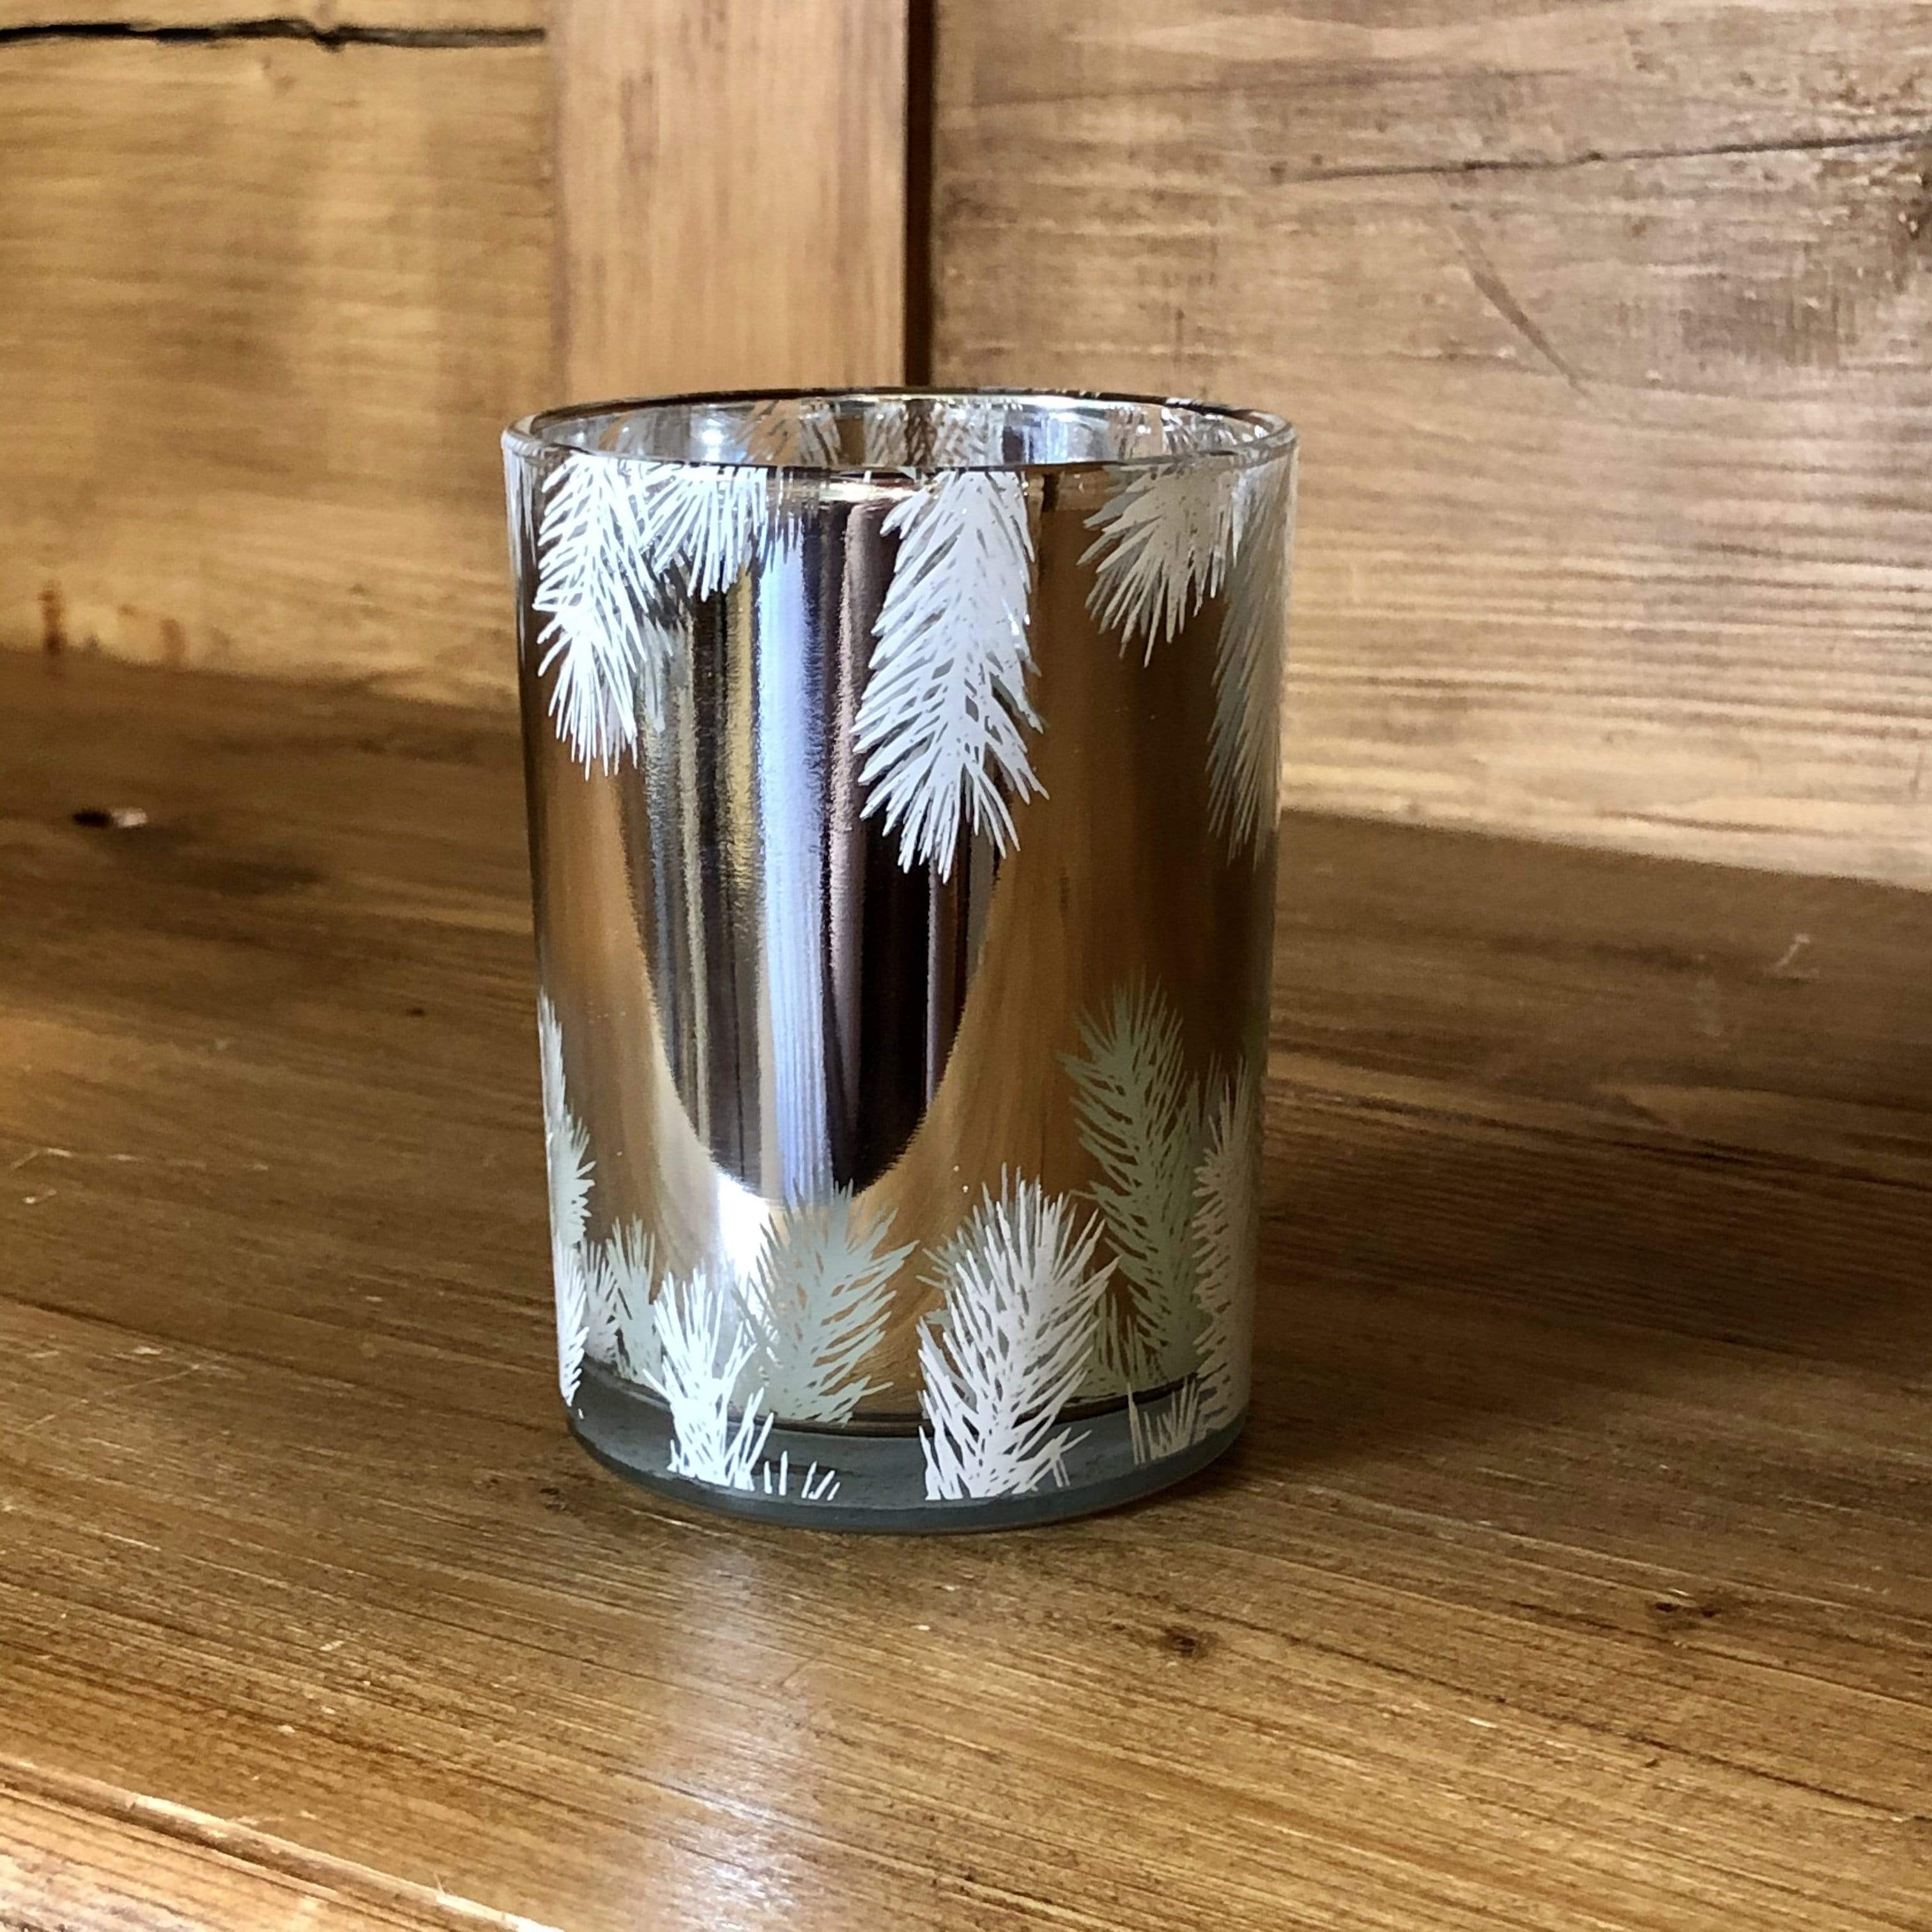 Frasier Fir Pine Needle Luminary Candle - Small